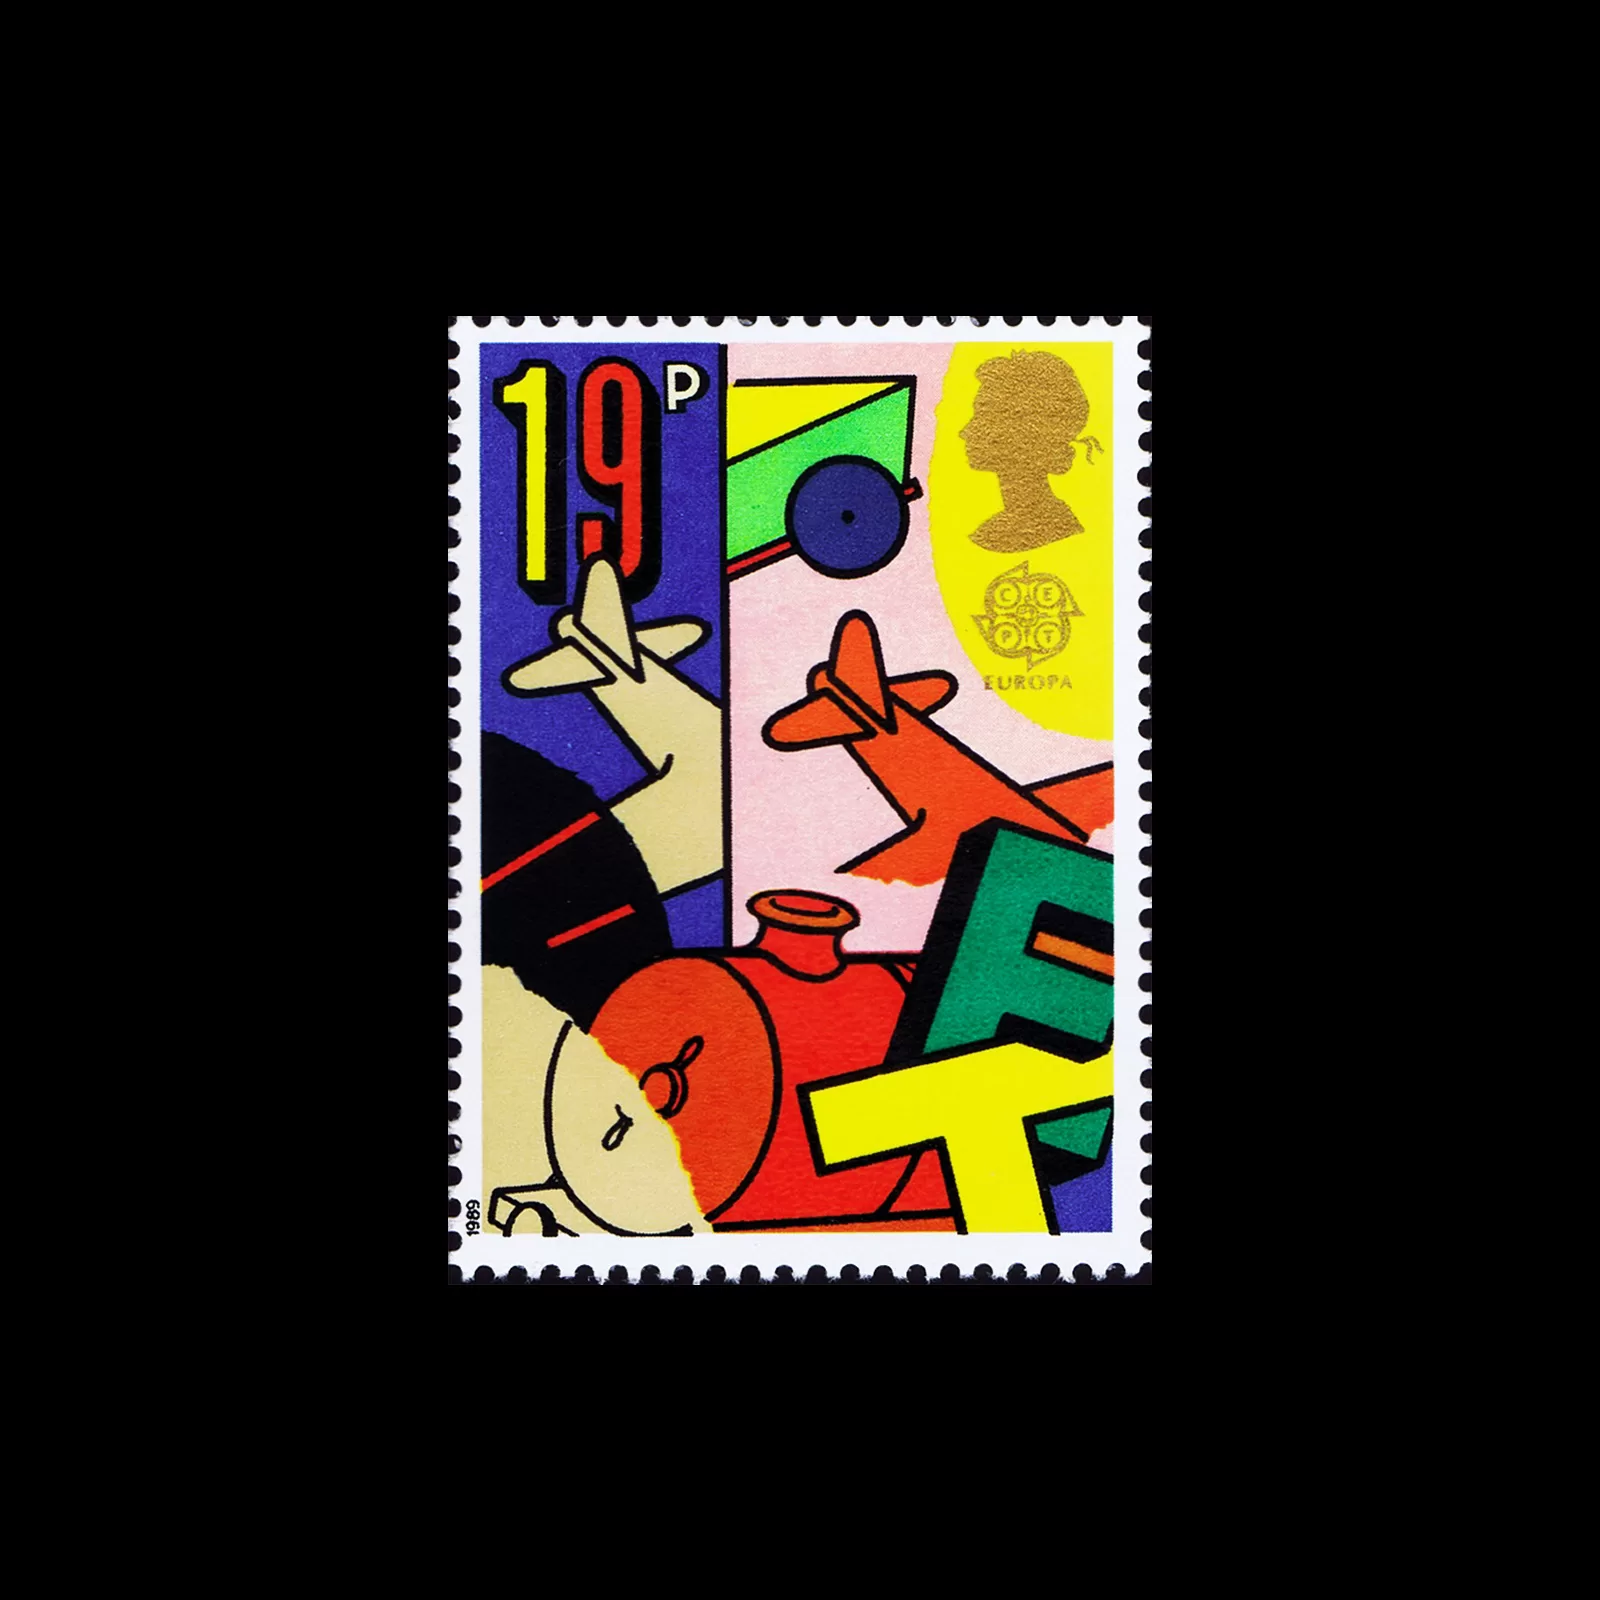 Childrens Play United Kingdom Stamps 1989. Designed by Dan Fern A jpg